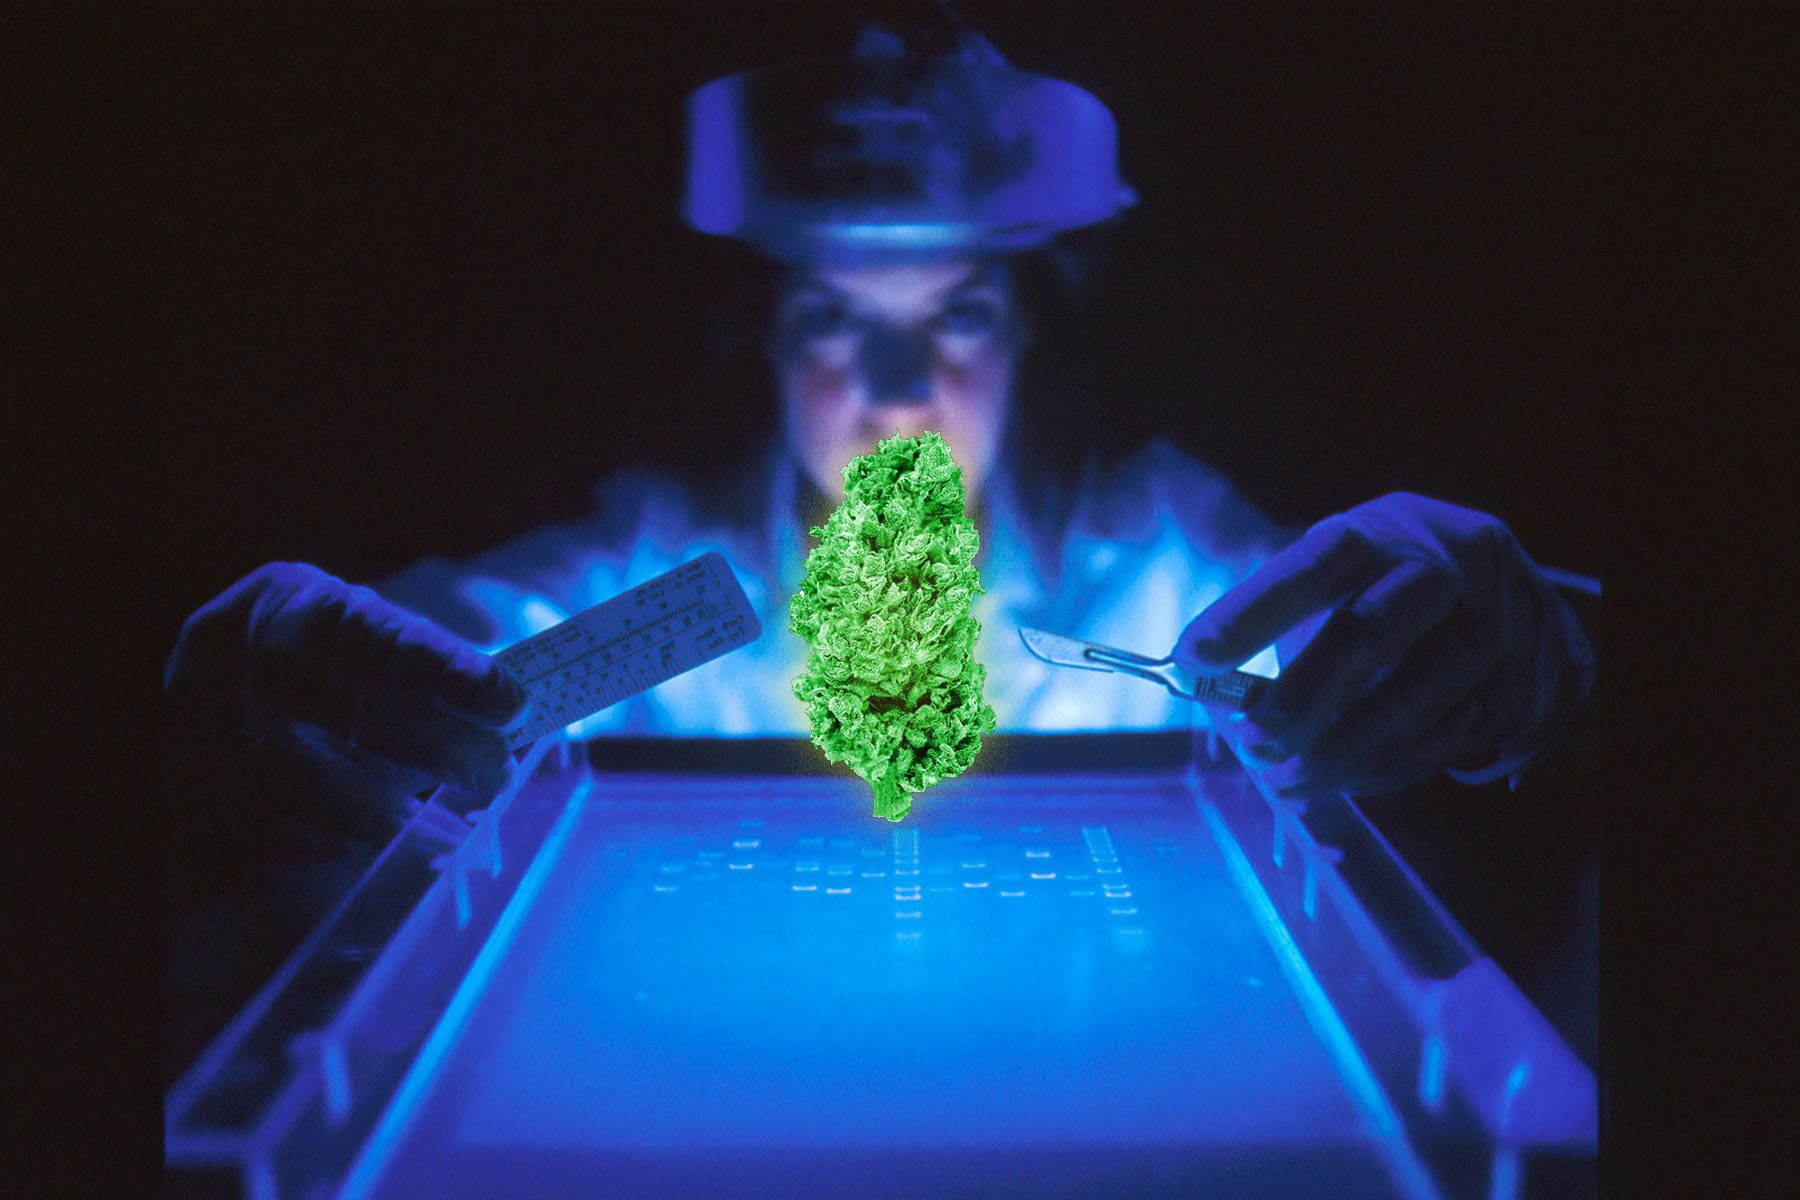 Scientist examining a floating cannabis bud